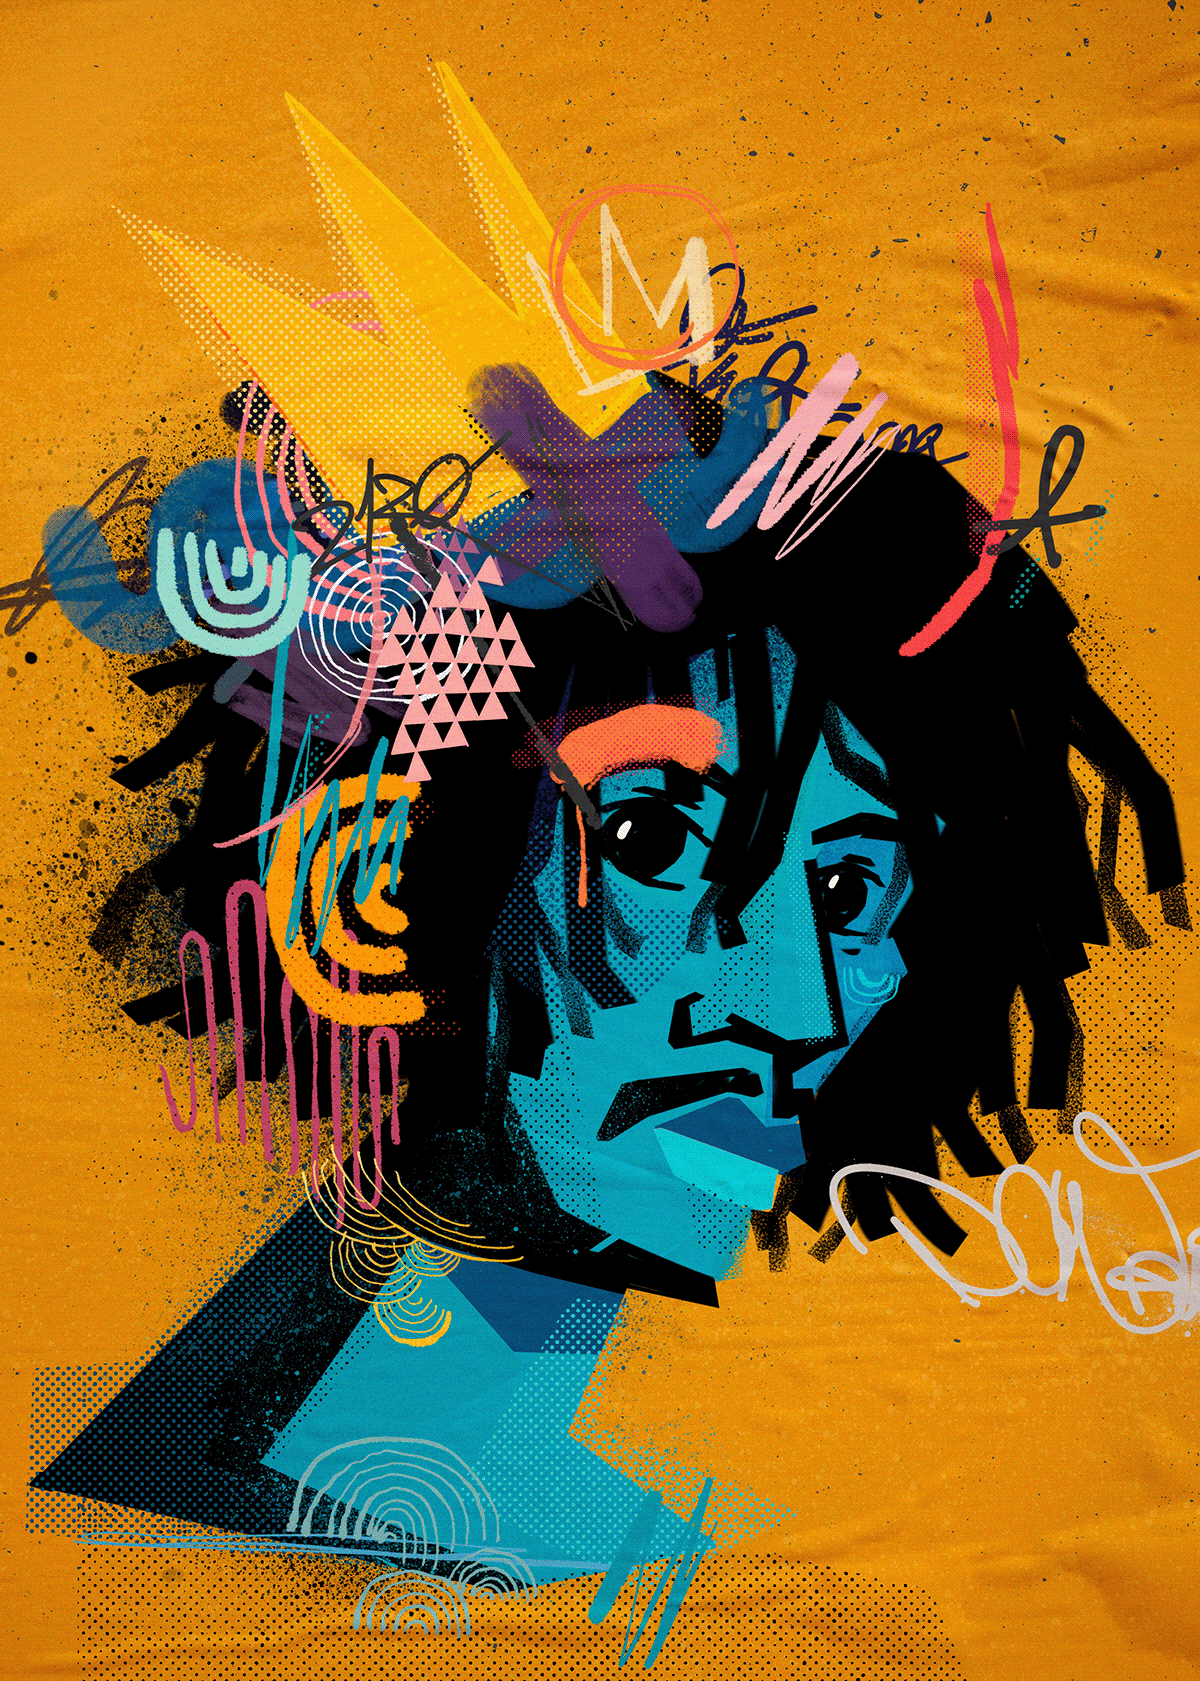 art collage digital illustration dow raiz gig poster hip hop poster rap Rincon Sapiencia Street Art 